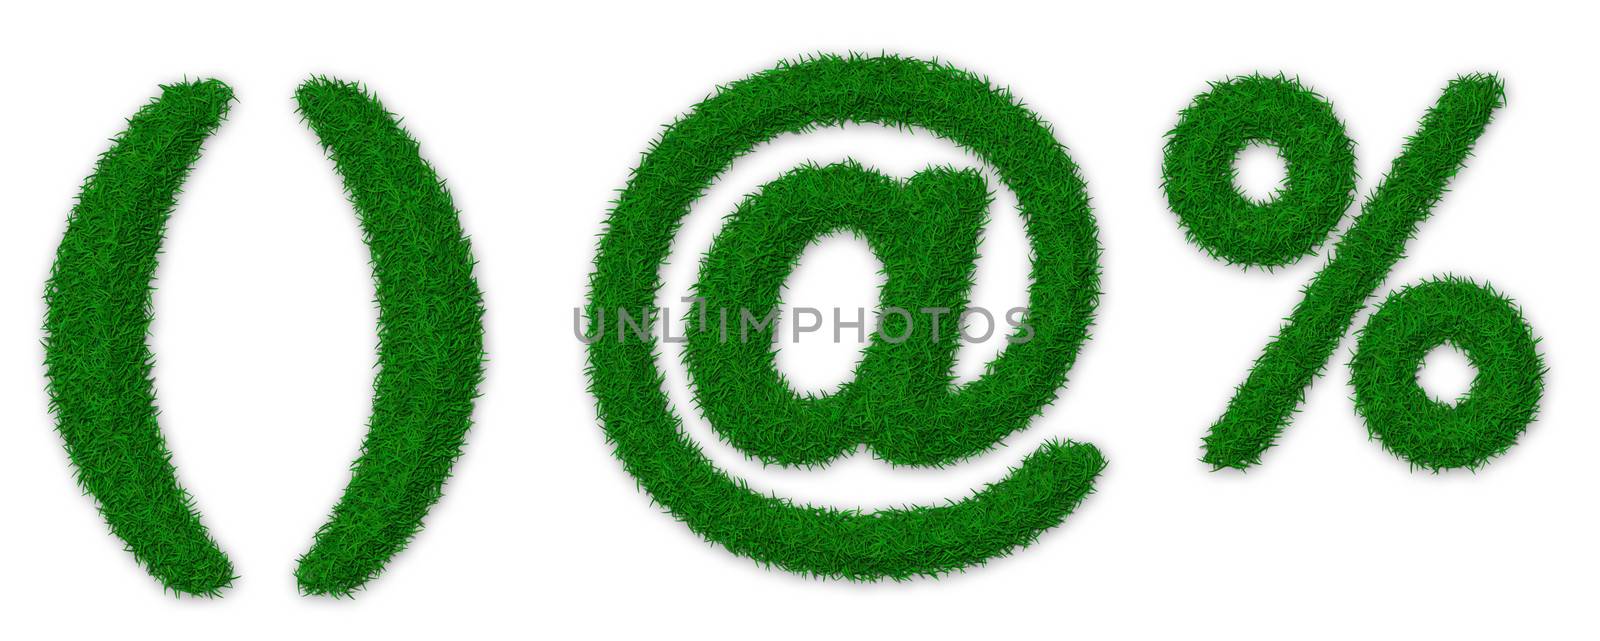 Illustration of math symbols made of grass